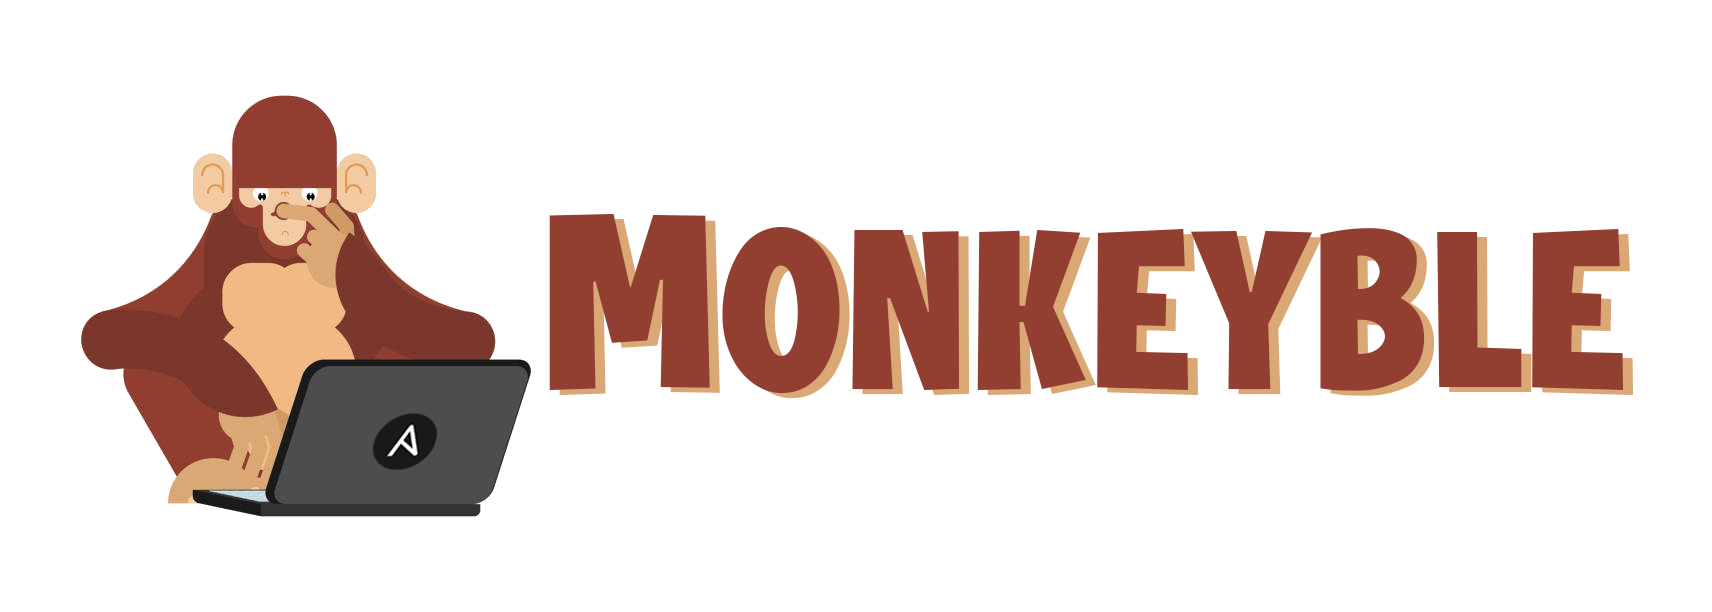 monkeyble_logo